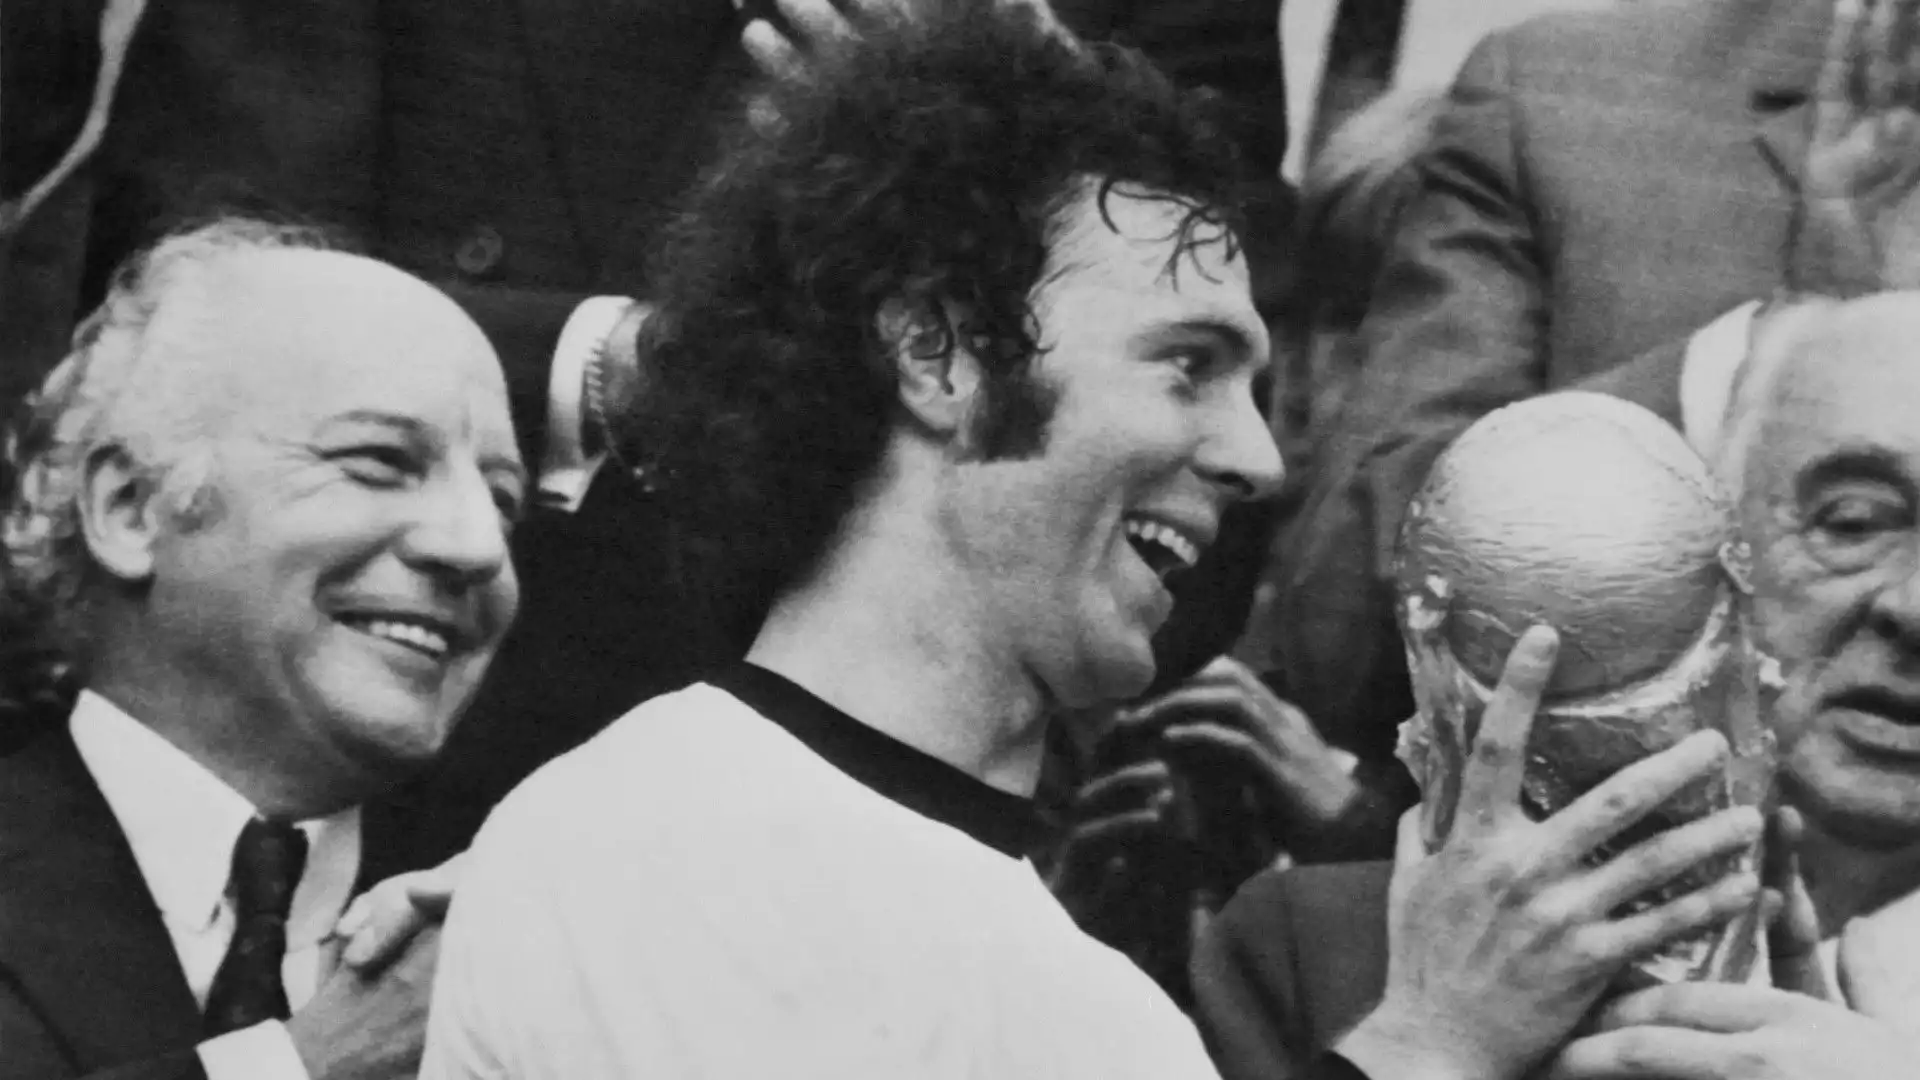 6- Franz Beckenbauer